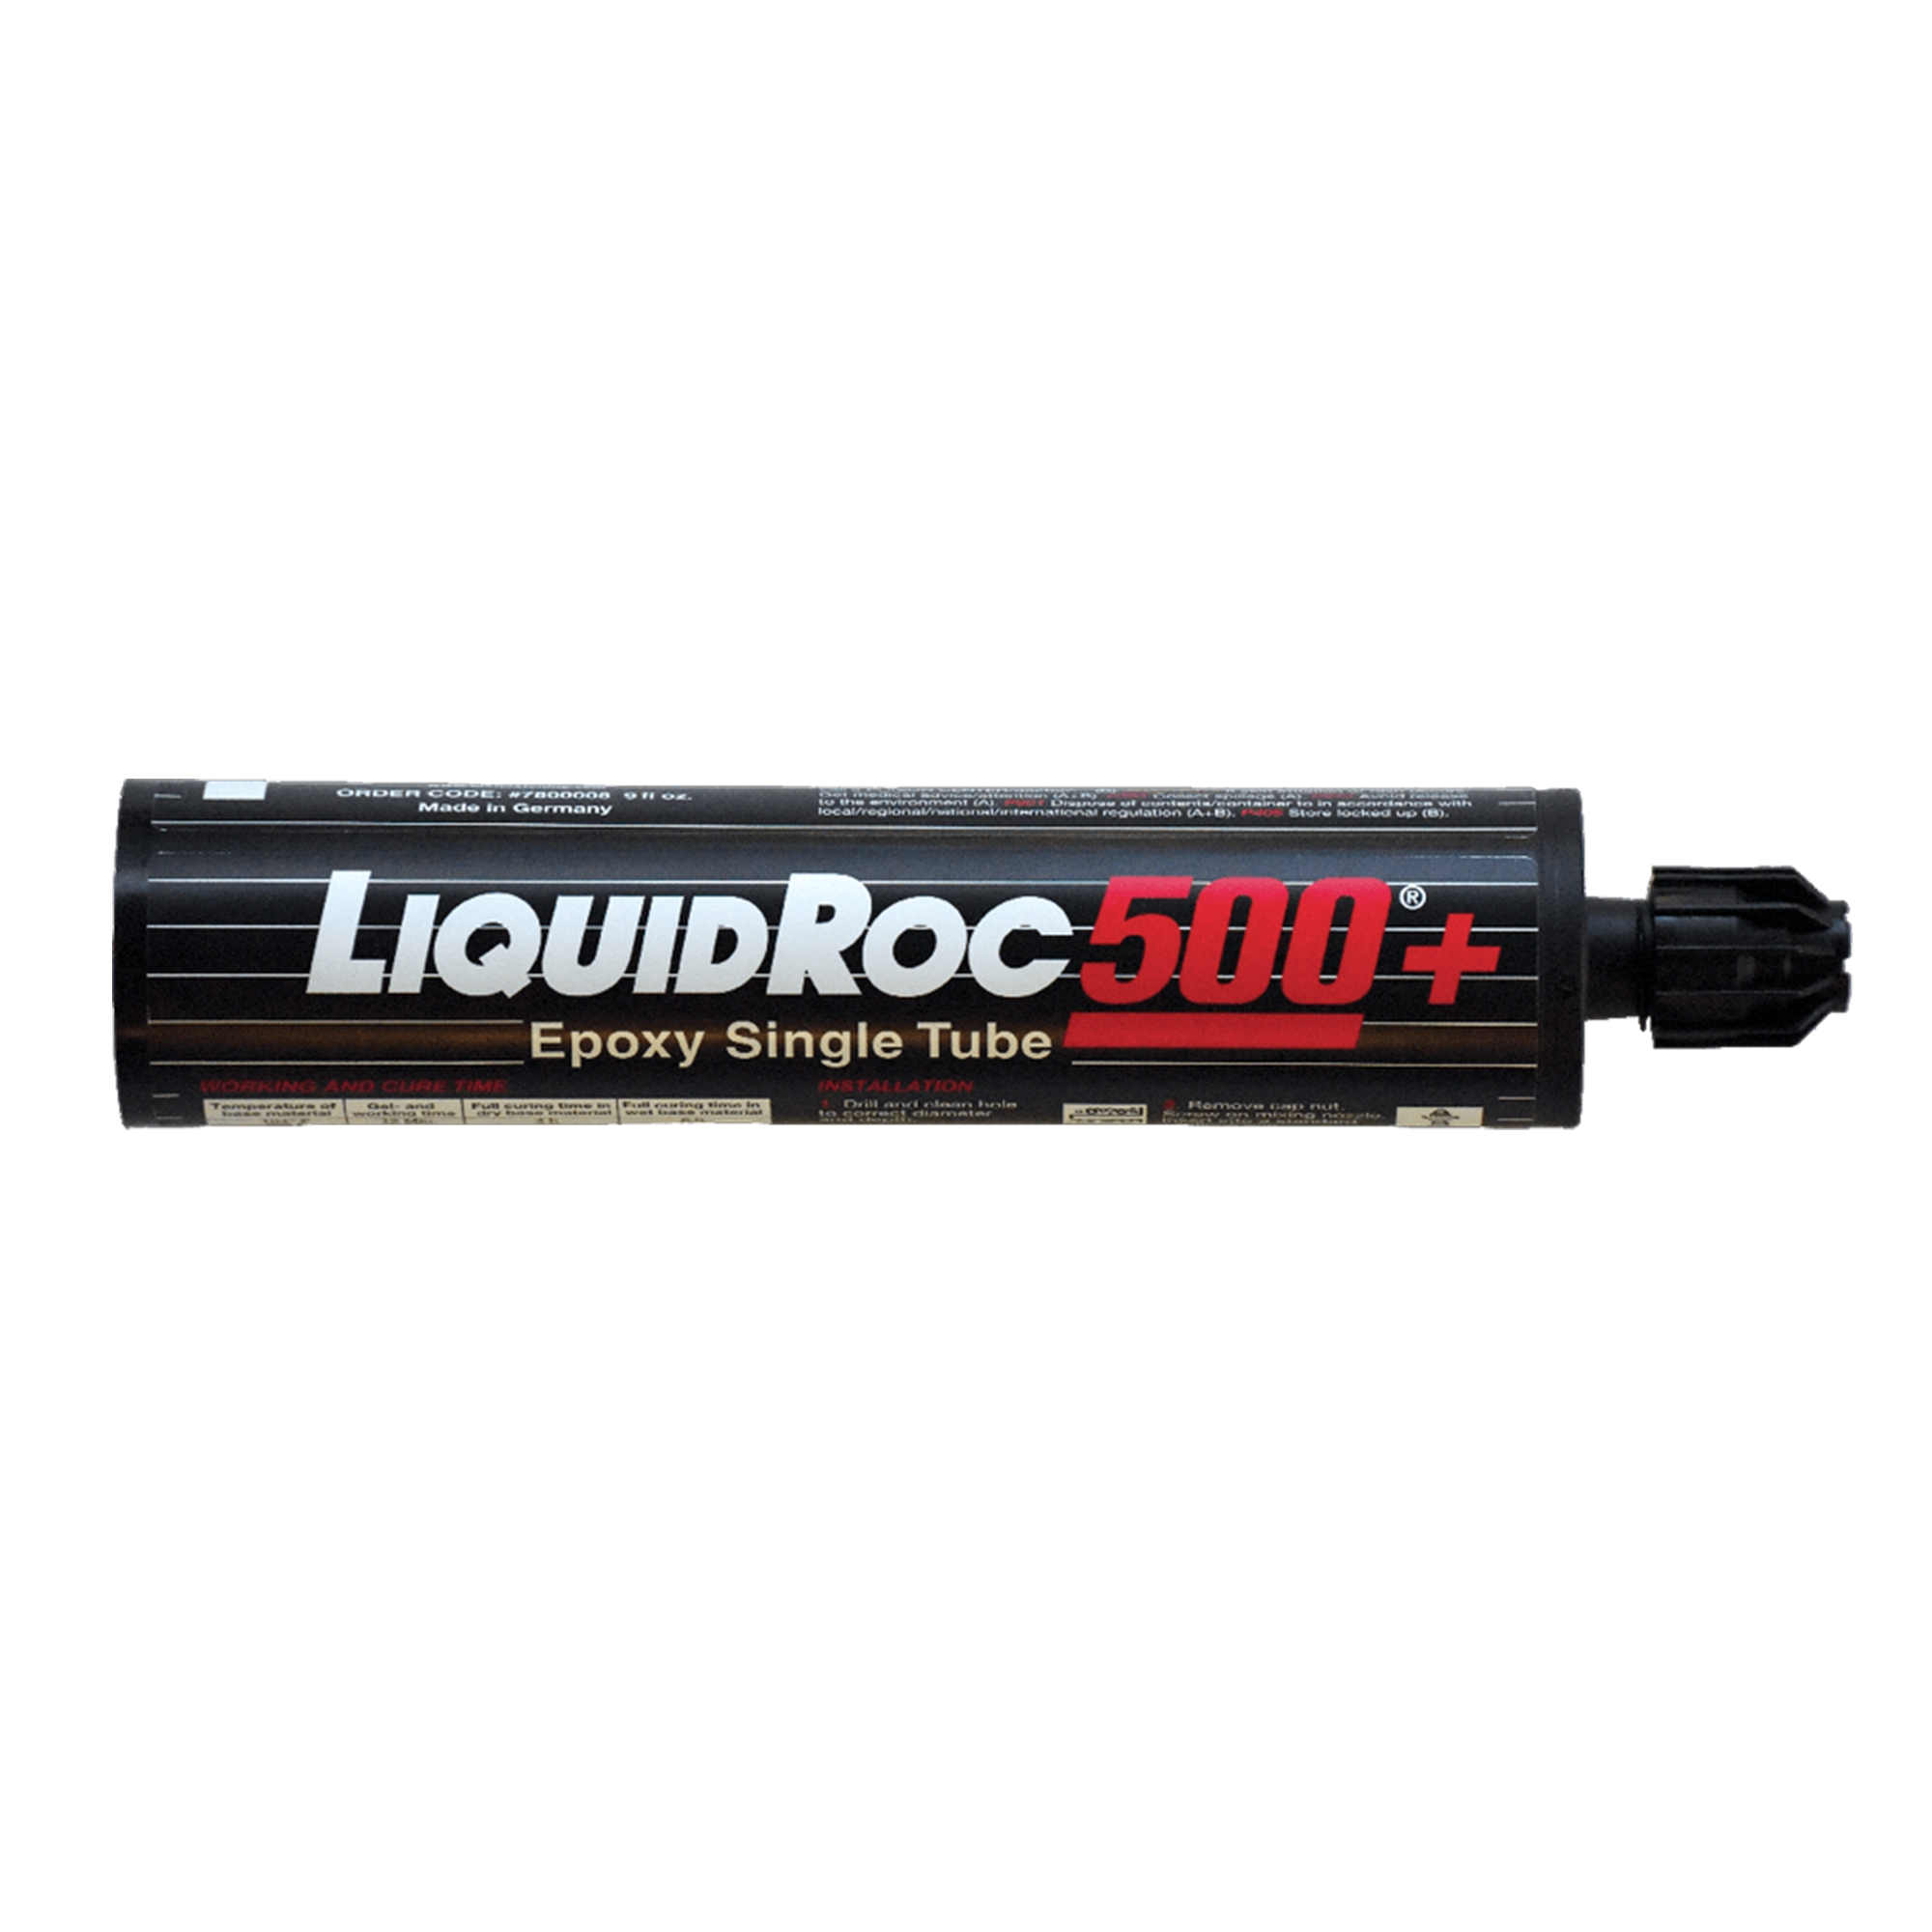 LiquidRoc 500+ Single Tube